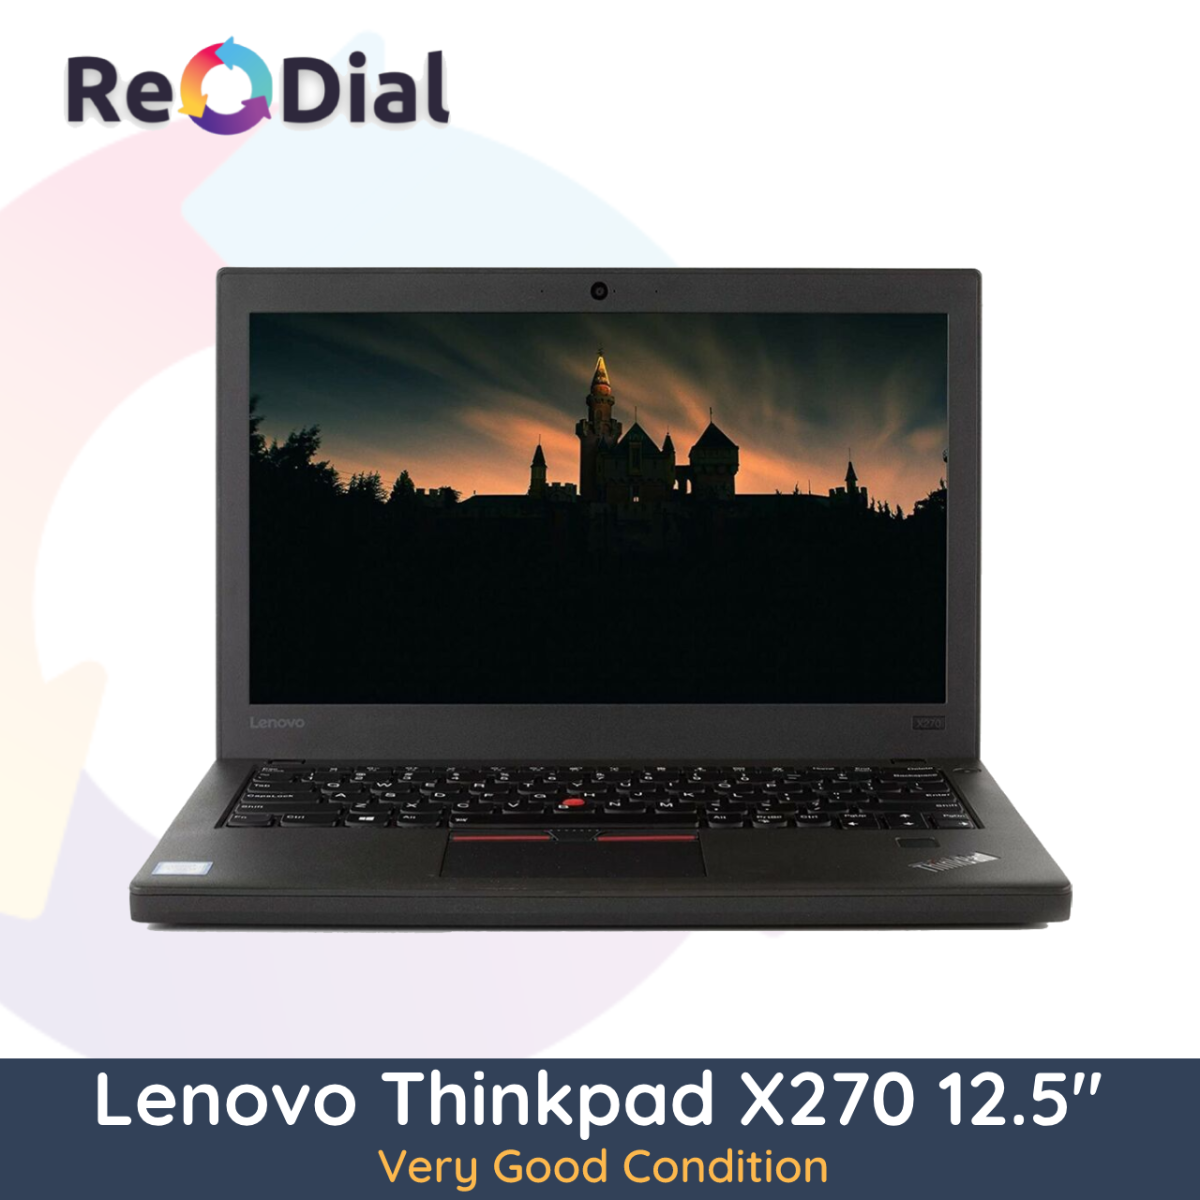 Lenovo ThinkPad X270 12.5" Laptop i5-6300U 256GB 8GB RAM - Very Good Condition